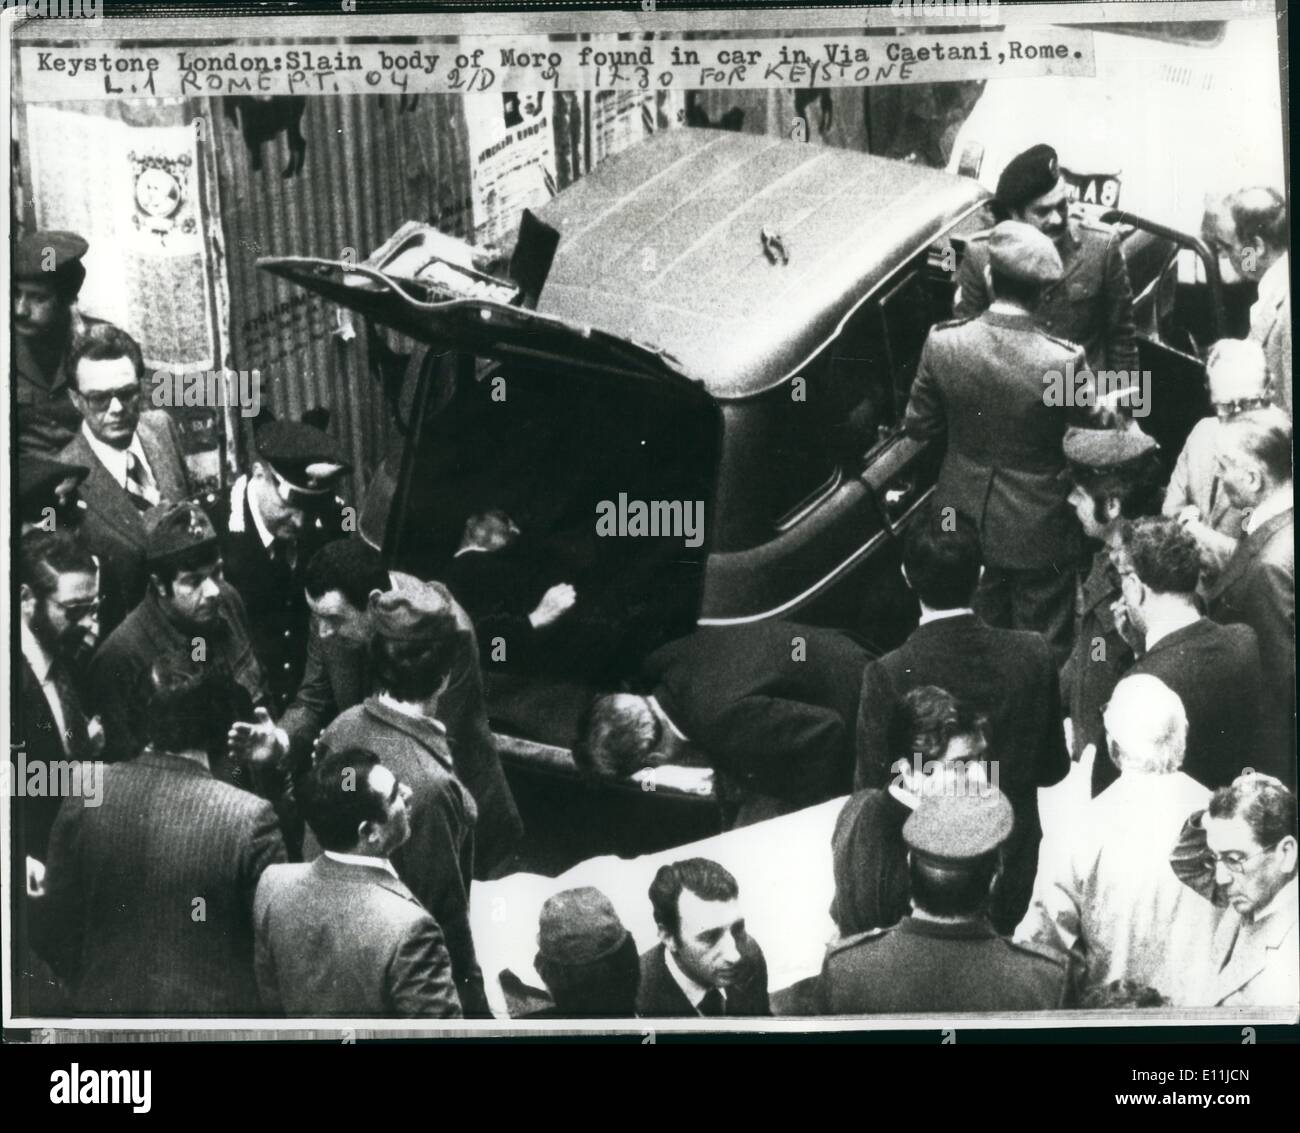 May 05, 1978 - Body of Moro found in Rome : The Body of Aldo Moro Stock  Photo - Alamy